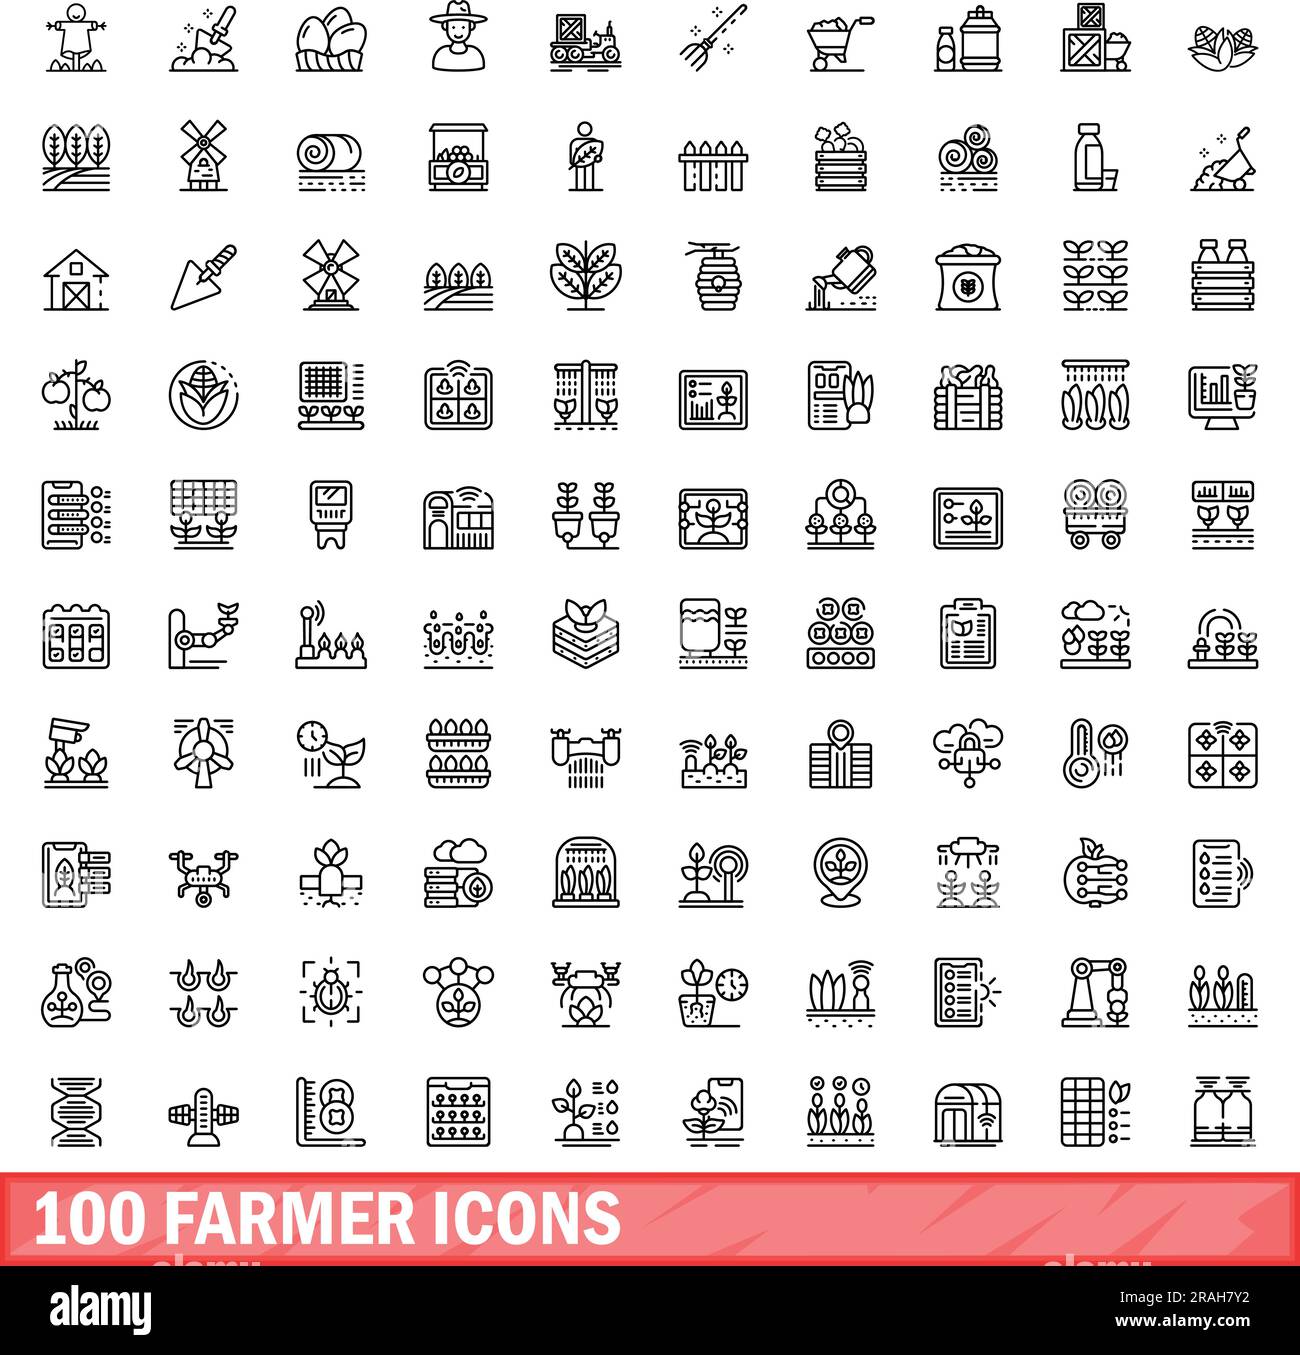 100 farmer icons set. Outline illustration of 100 farmer icons vector set isolated on white background Stock Vector